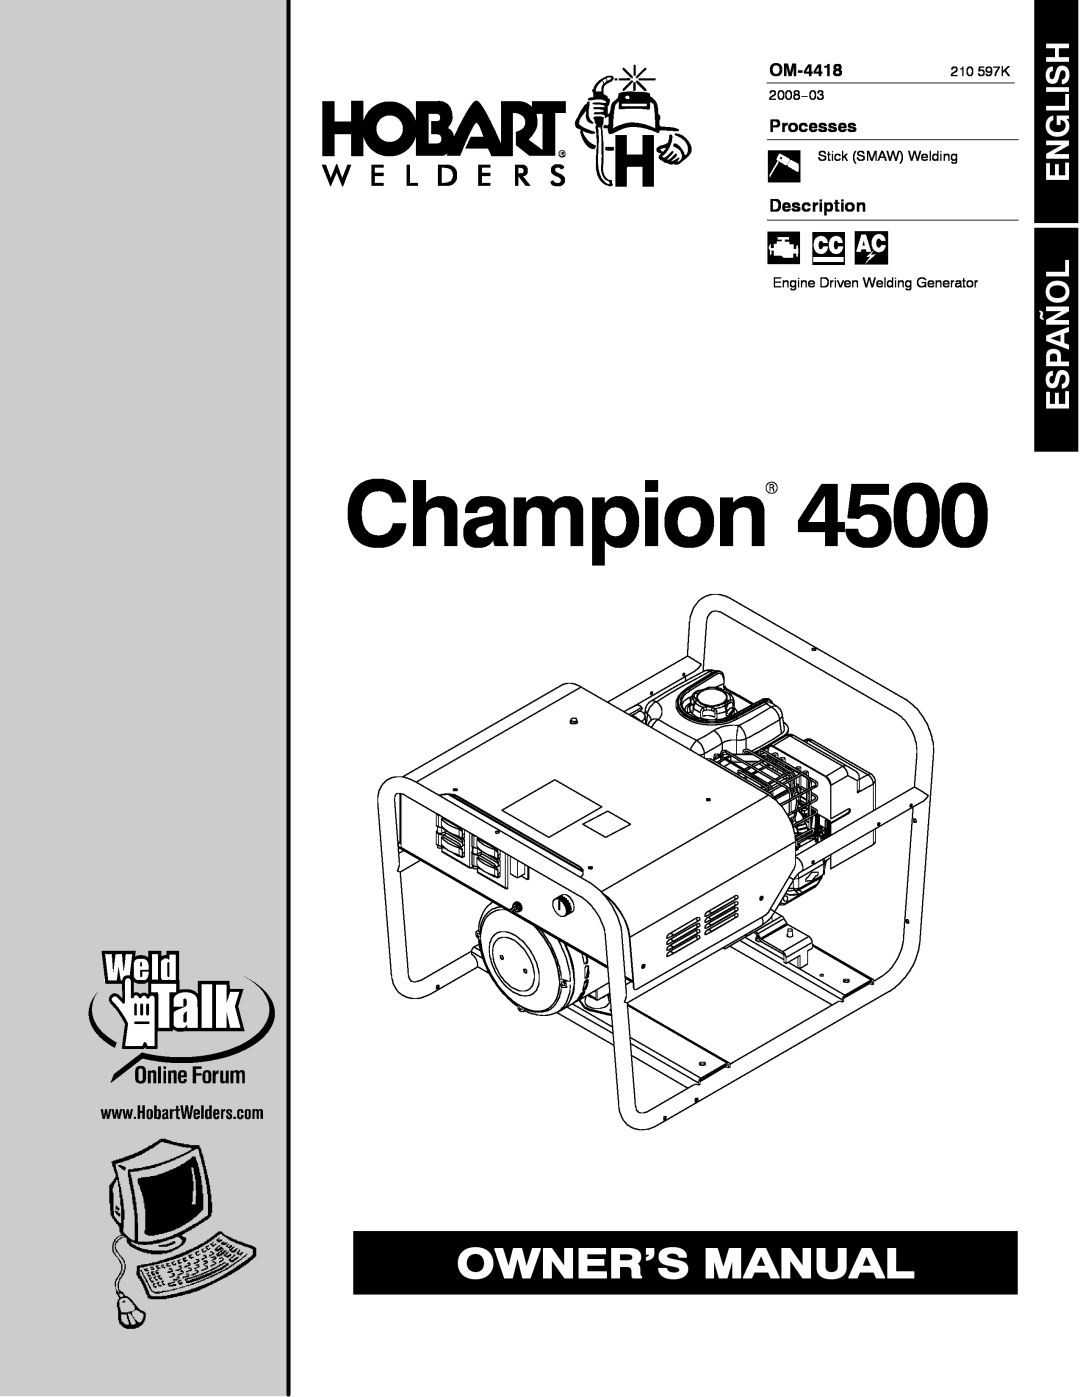 Hobart Welding Products 4500 manual ChampionR, English Español, OM-4418210 597K, Processes, Description 